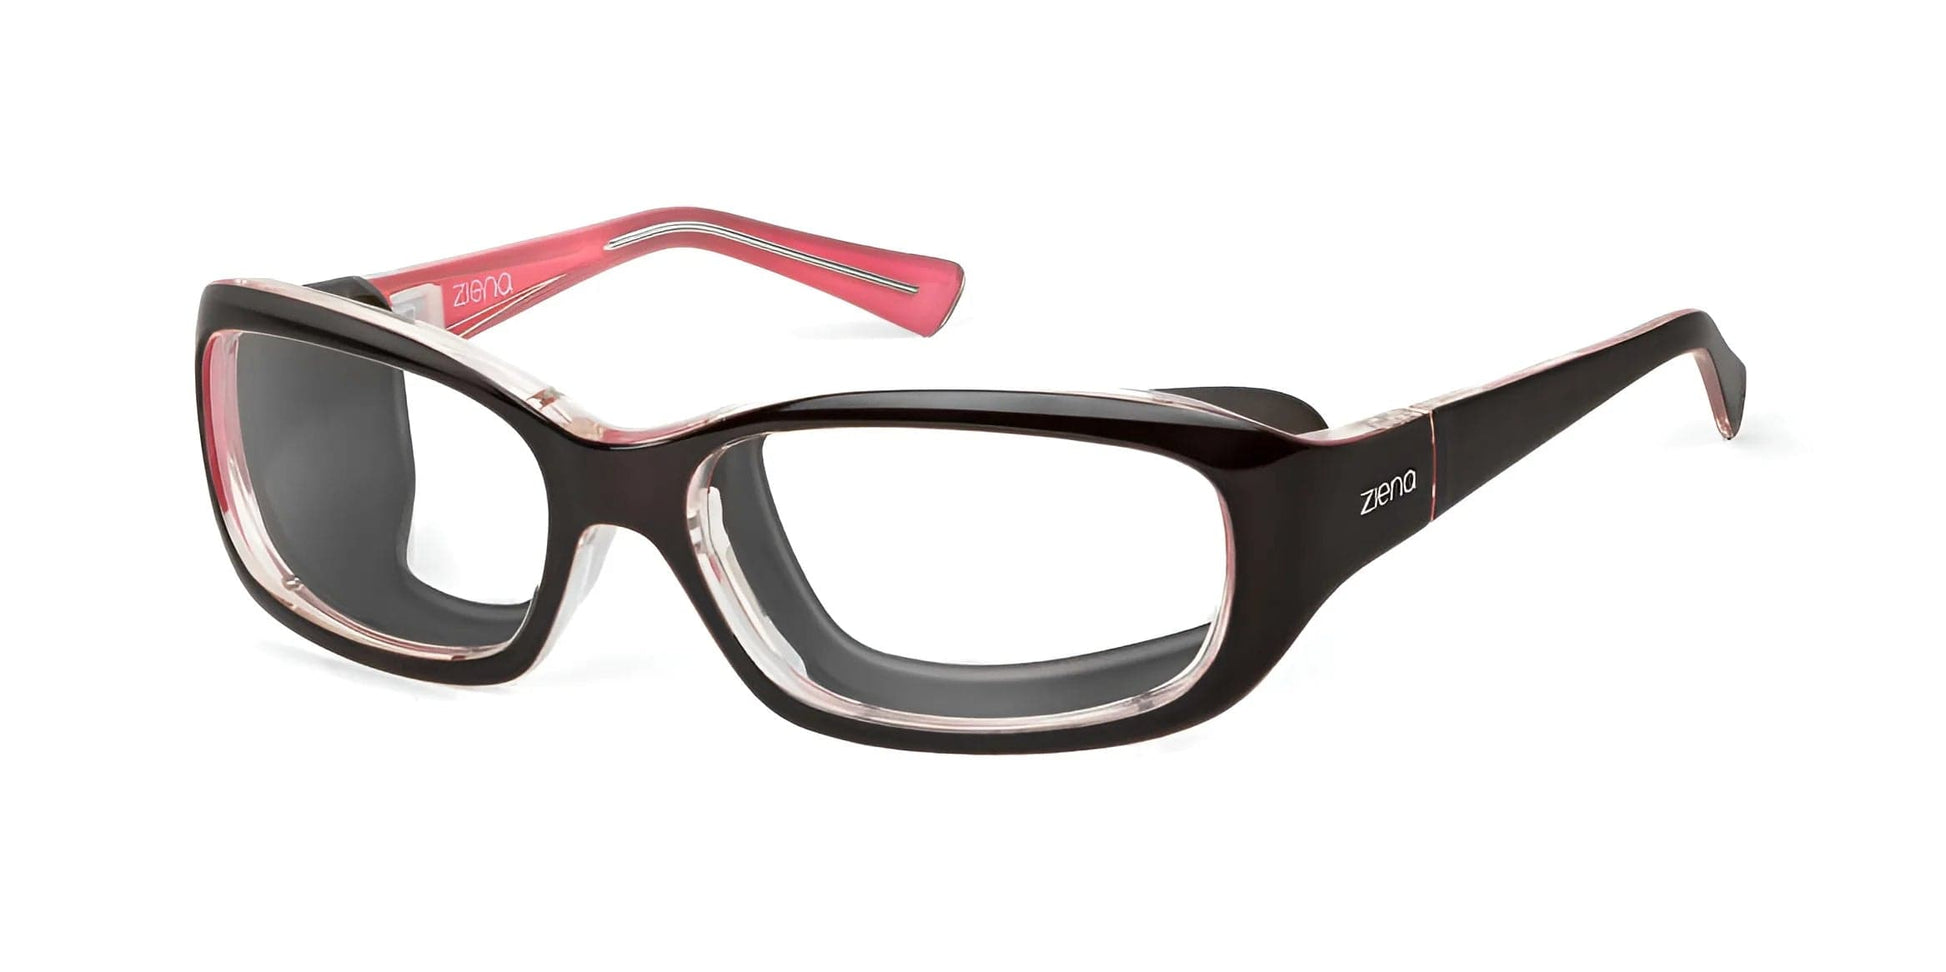 Ziena Verona Eyeglasses Rose / Clear +2.50 / Black